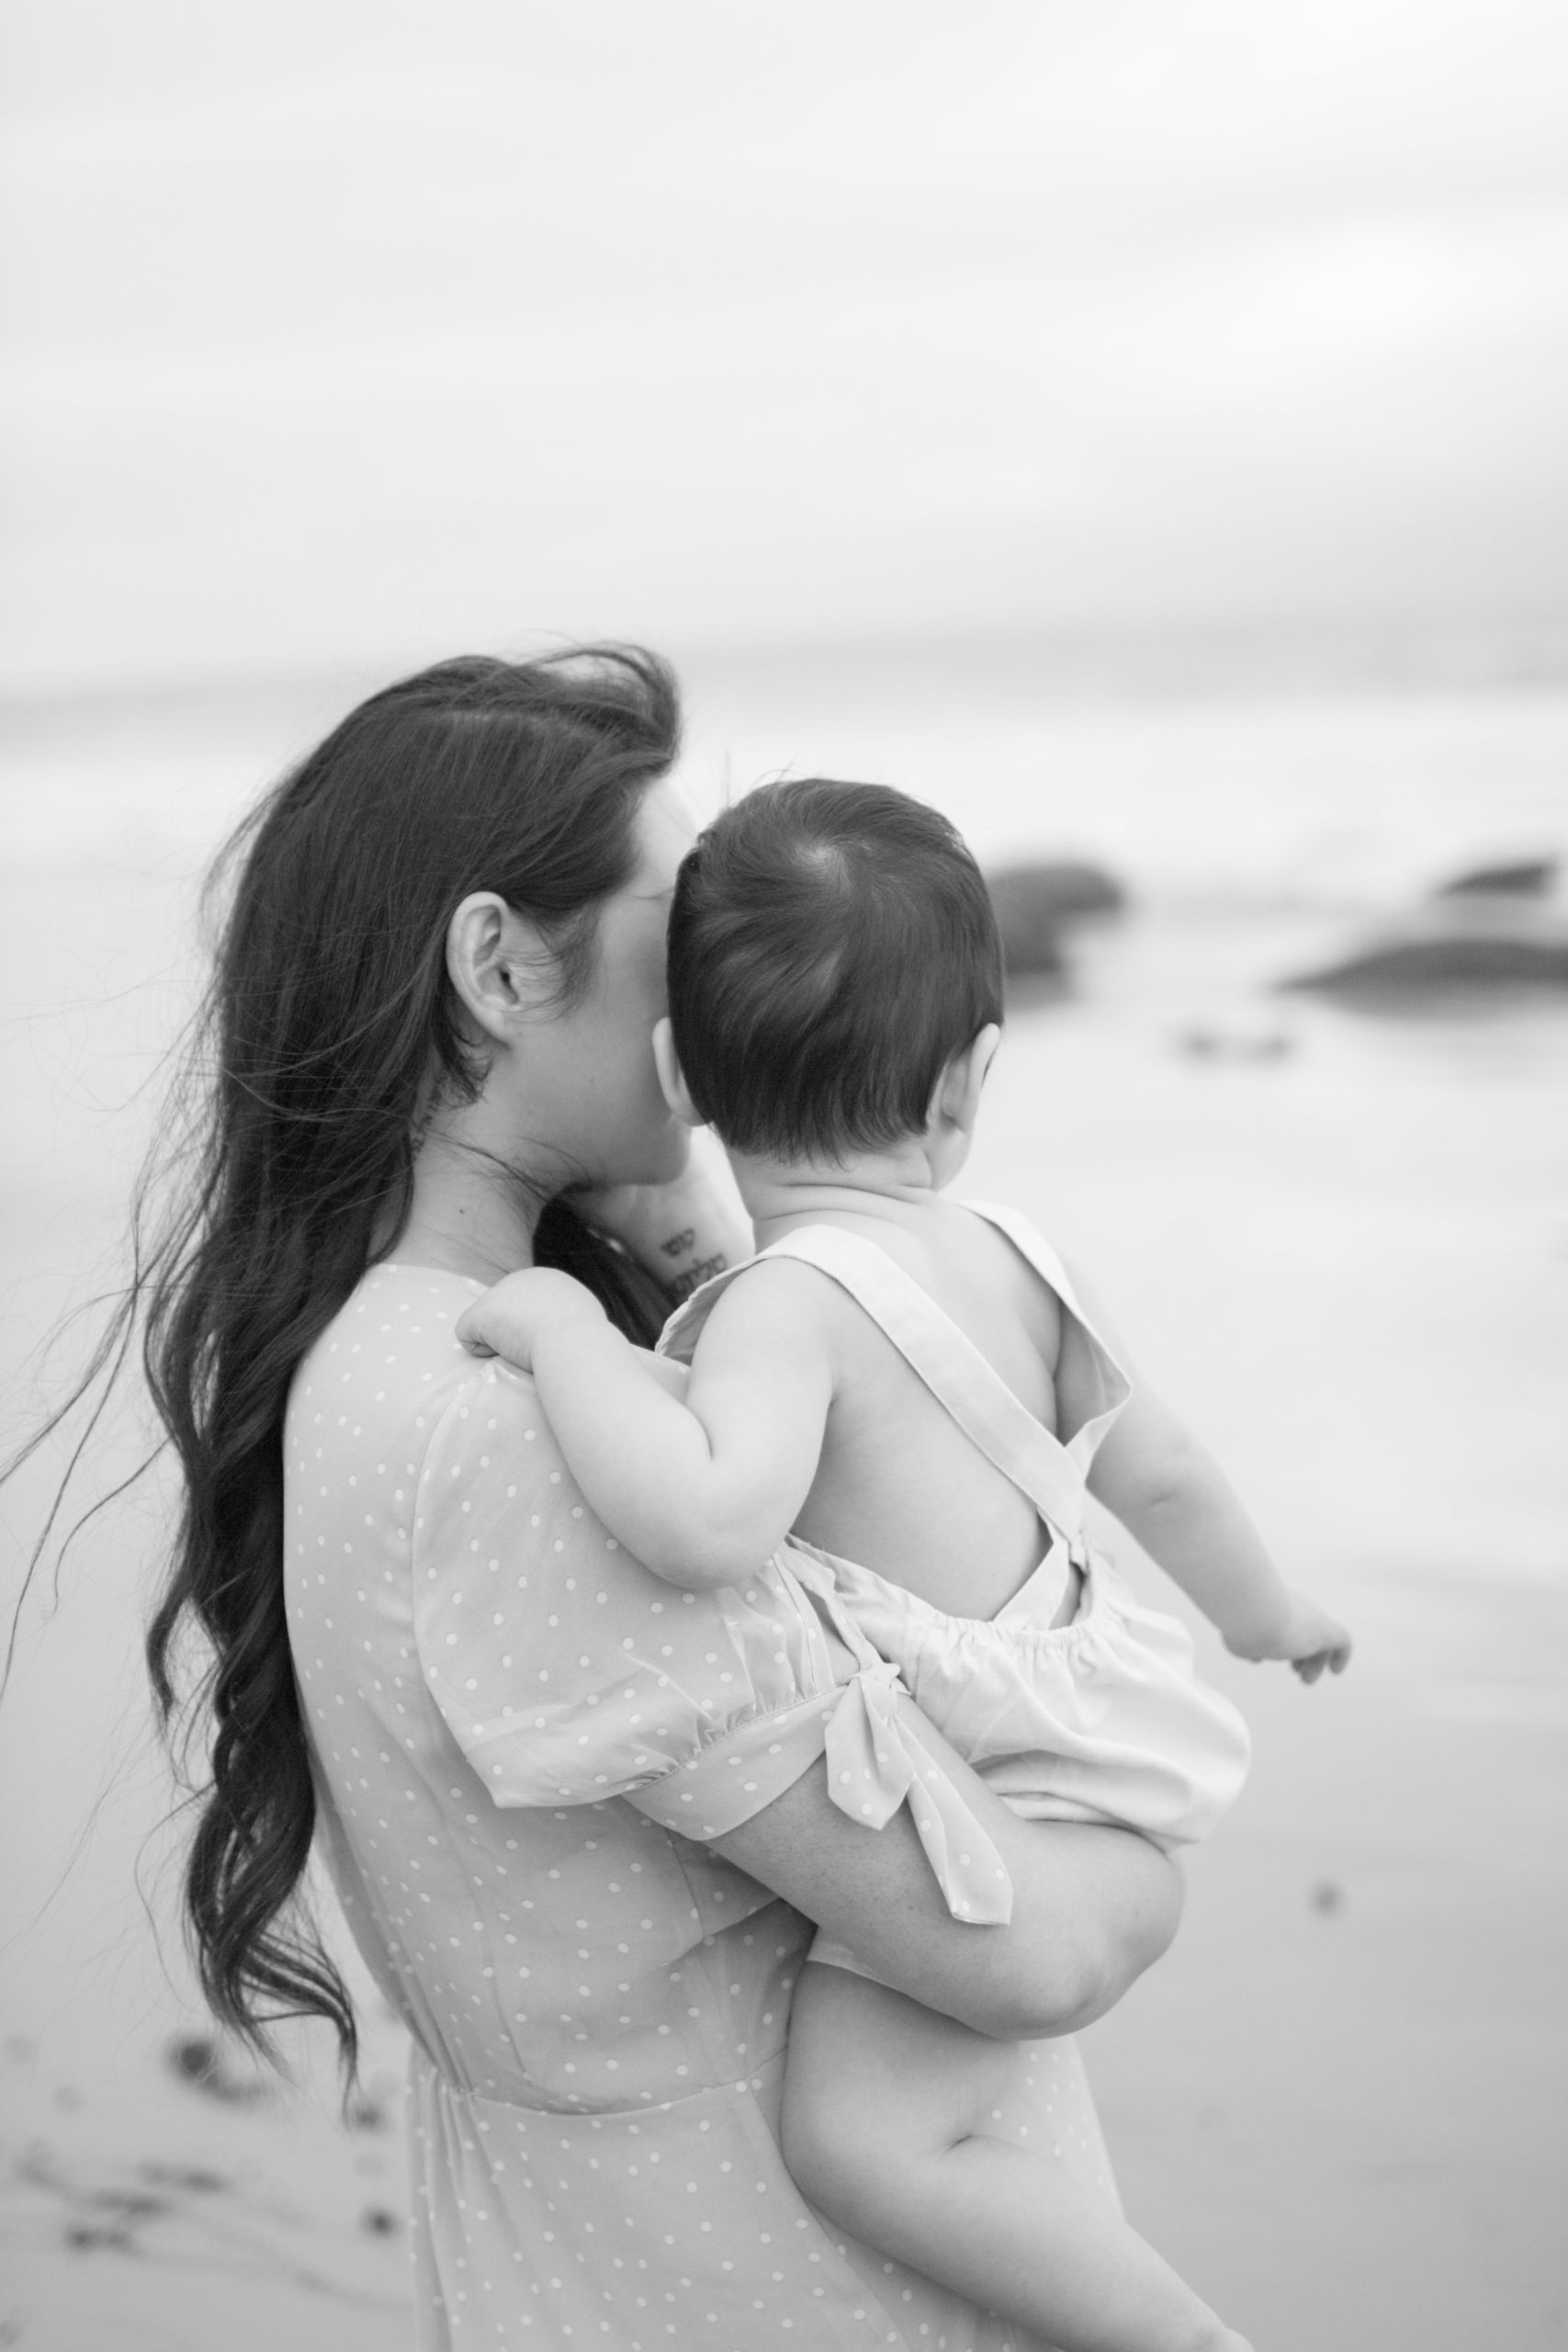 Honest Motherhood: Thoughts of Reality as a Photographer vs. Social Media